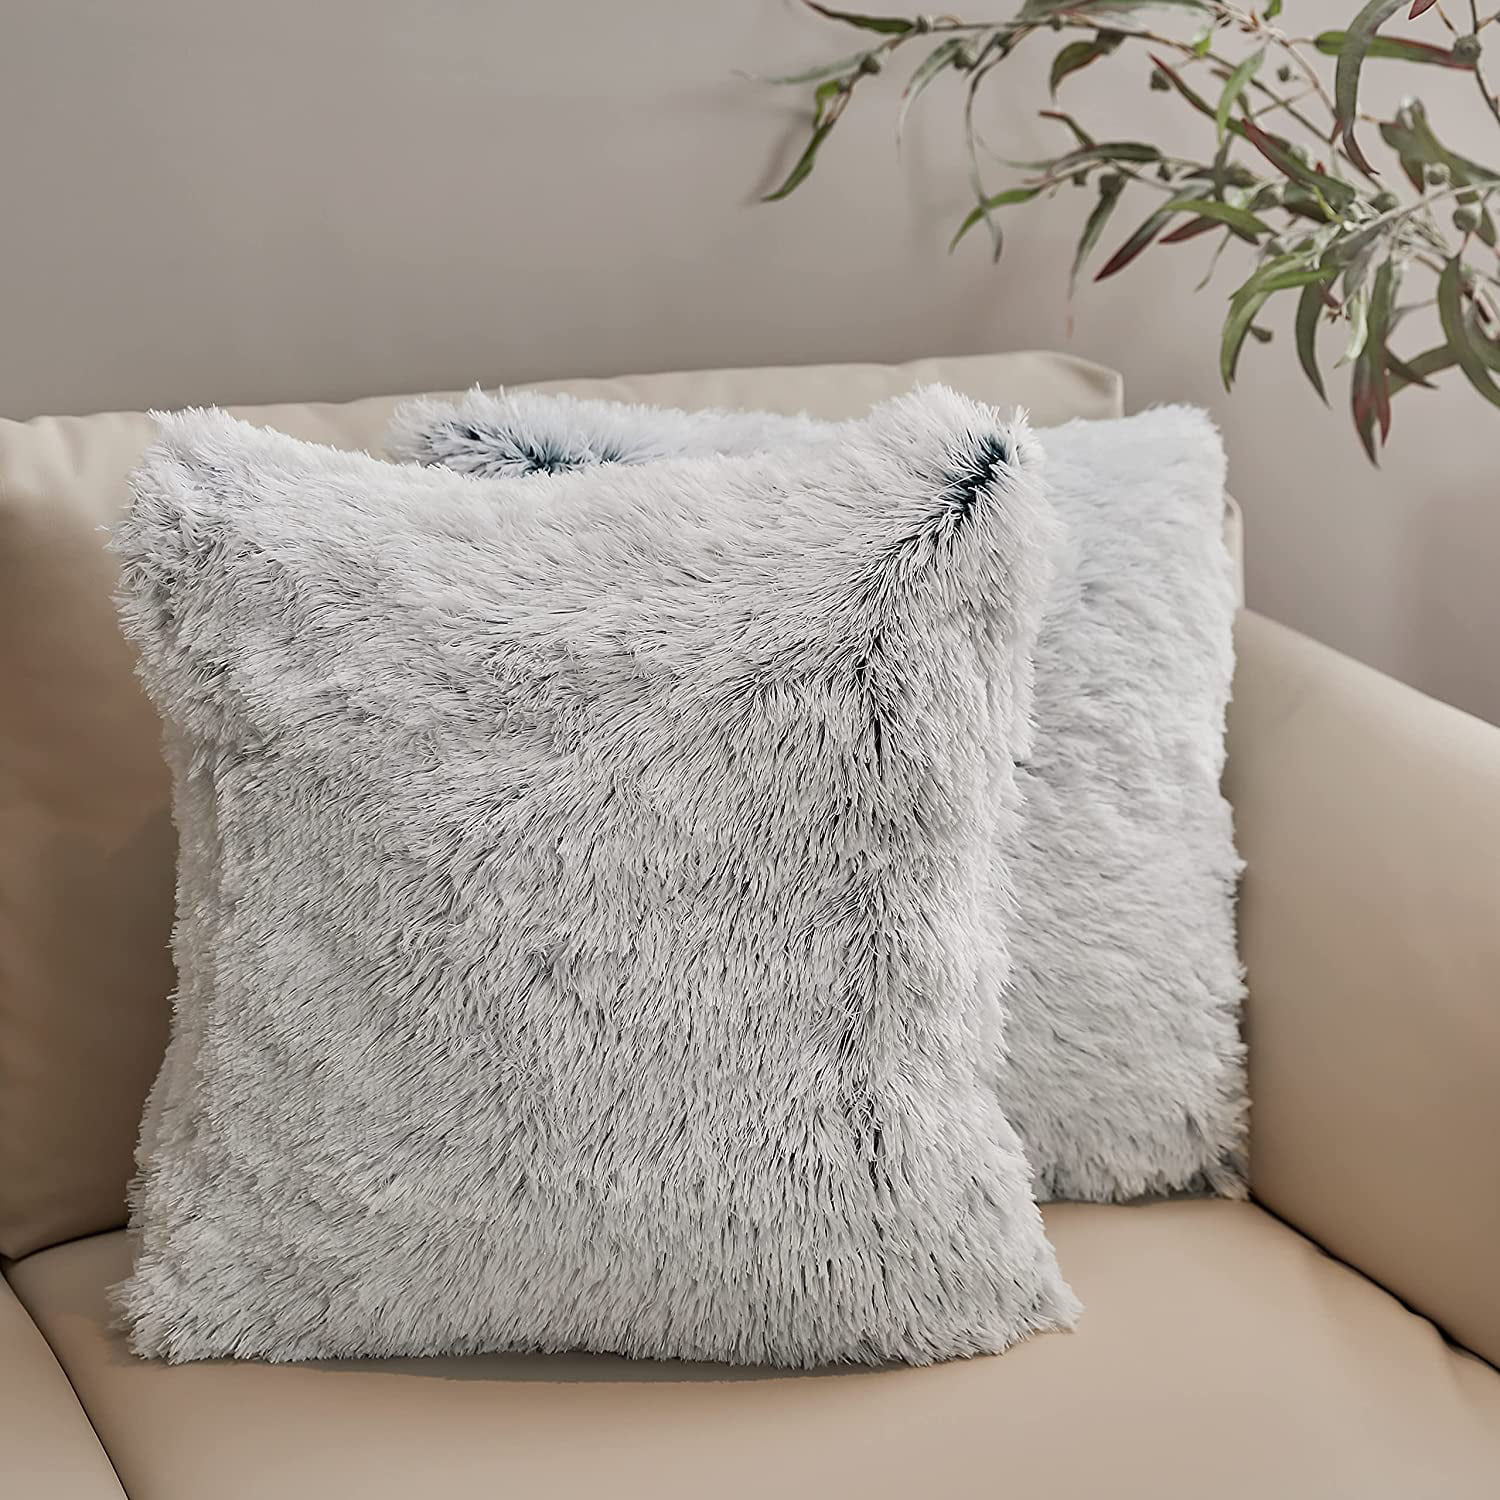 Set of 2 Shaggy Long Hair Throw Pillows - Super Soft and Plush Faux Fur Accent  Pillows 